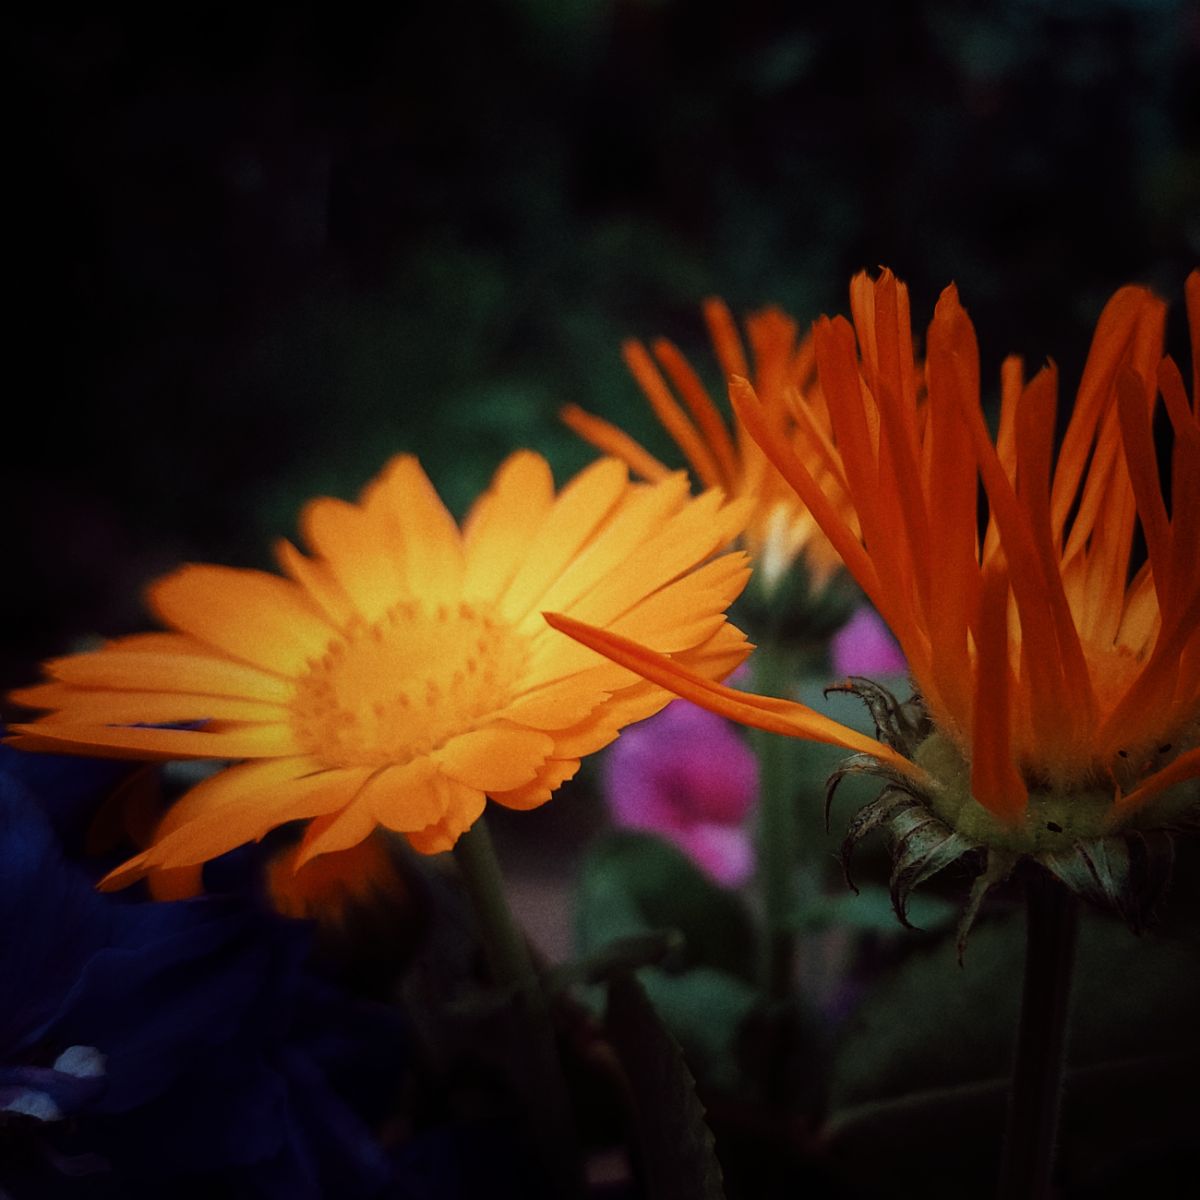 Orange flowers, close-up.